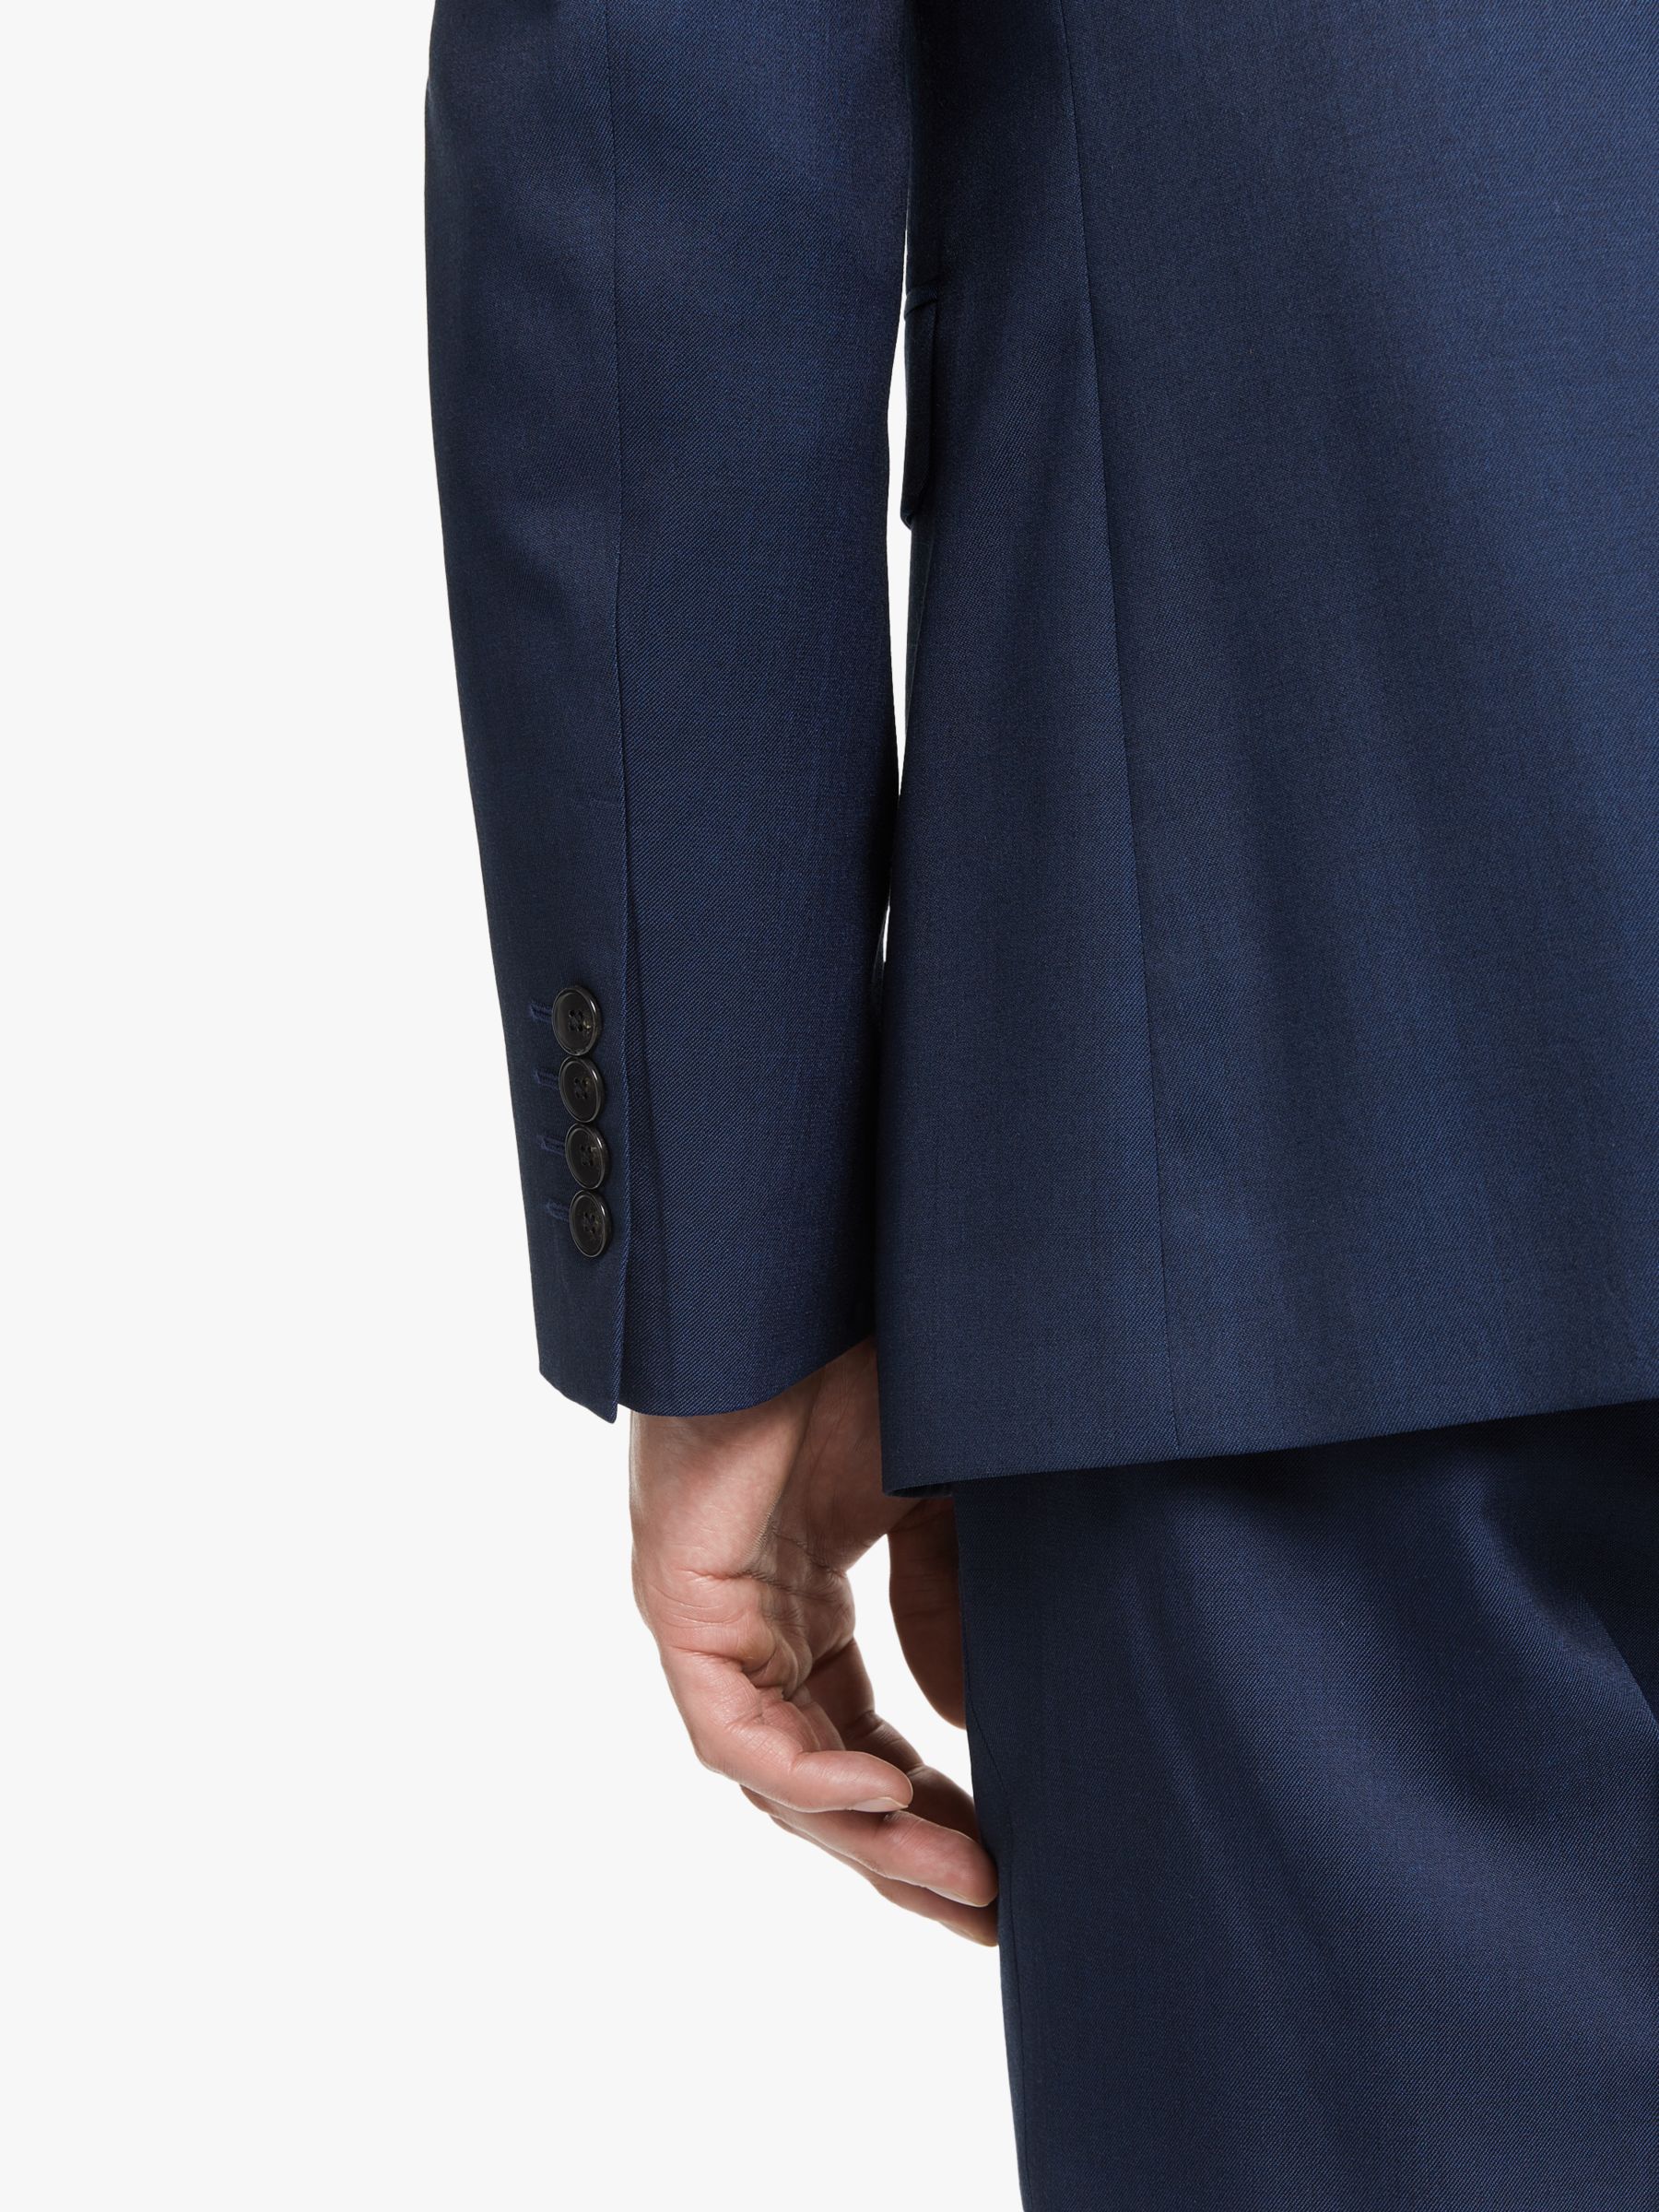 John Lewis & Partners Washable Tailored Suit Jacket, Navy